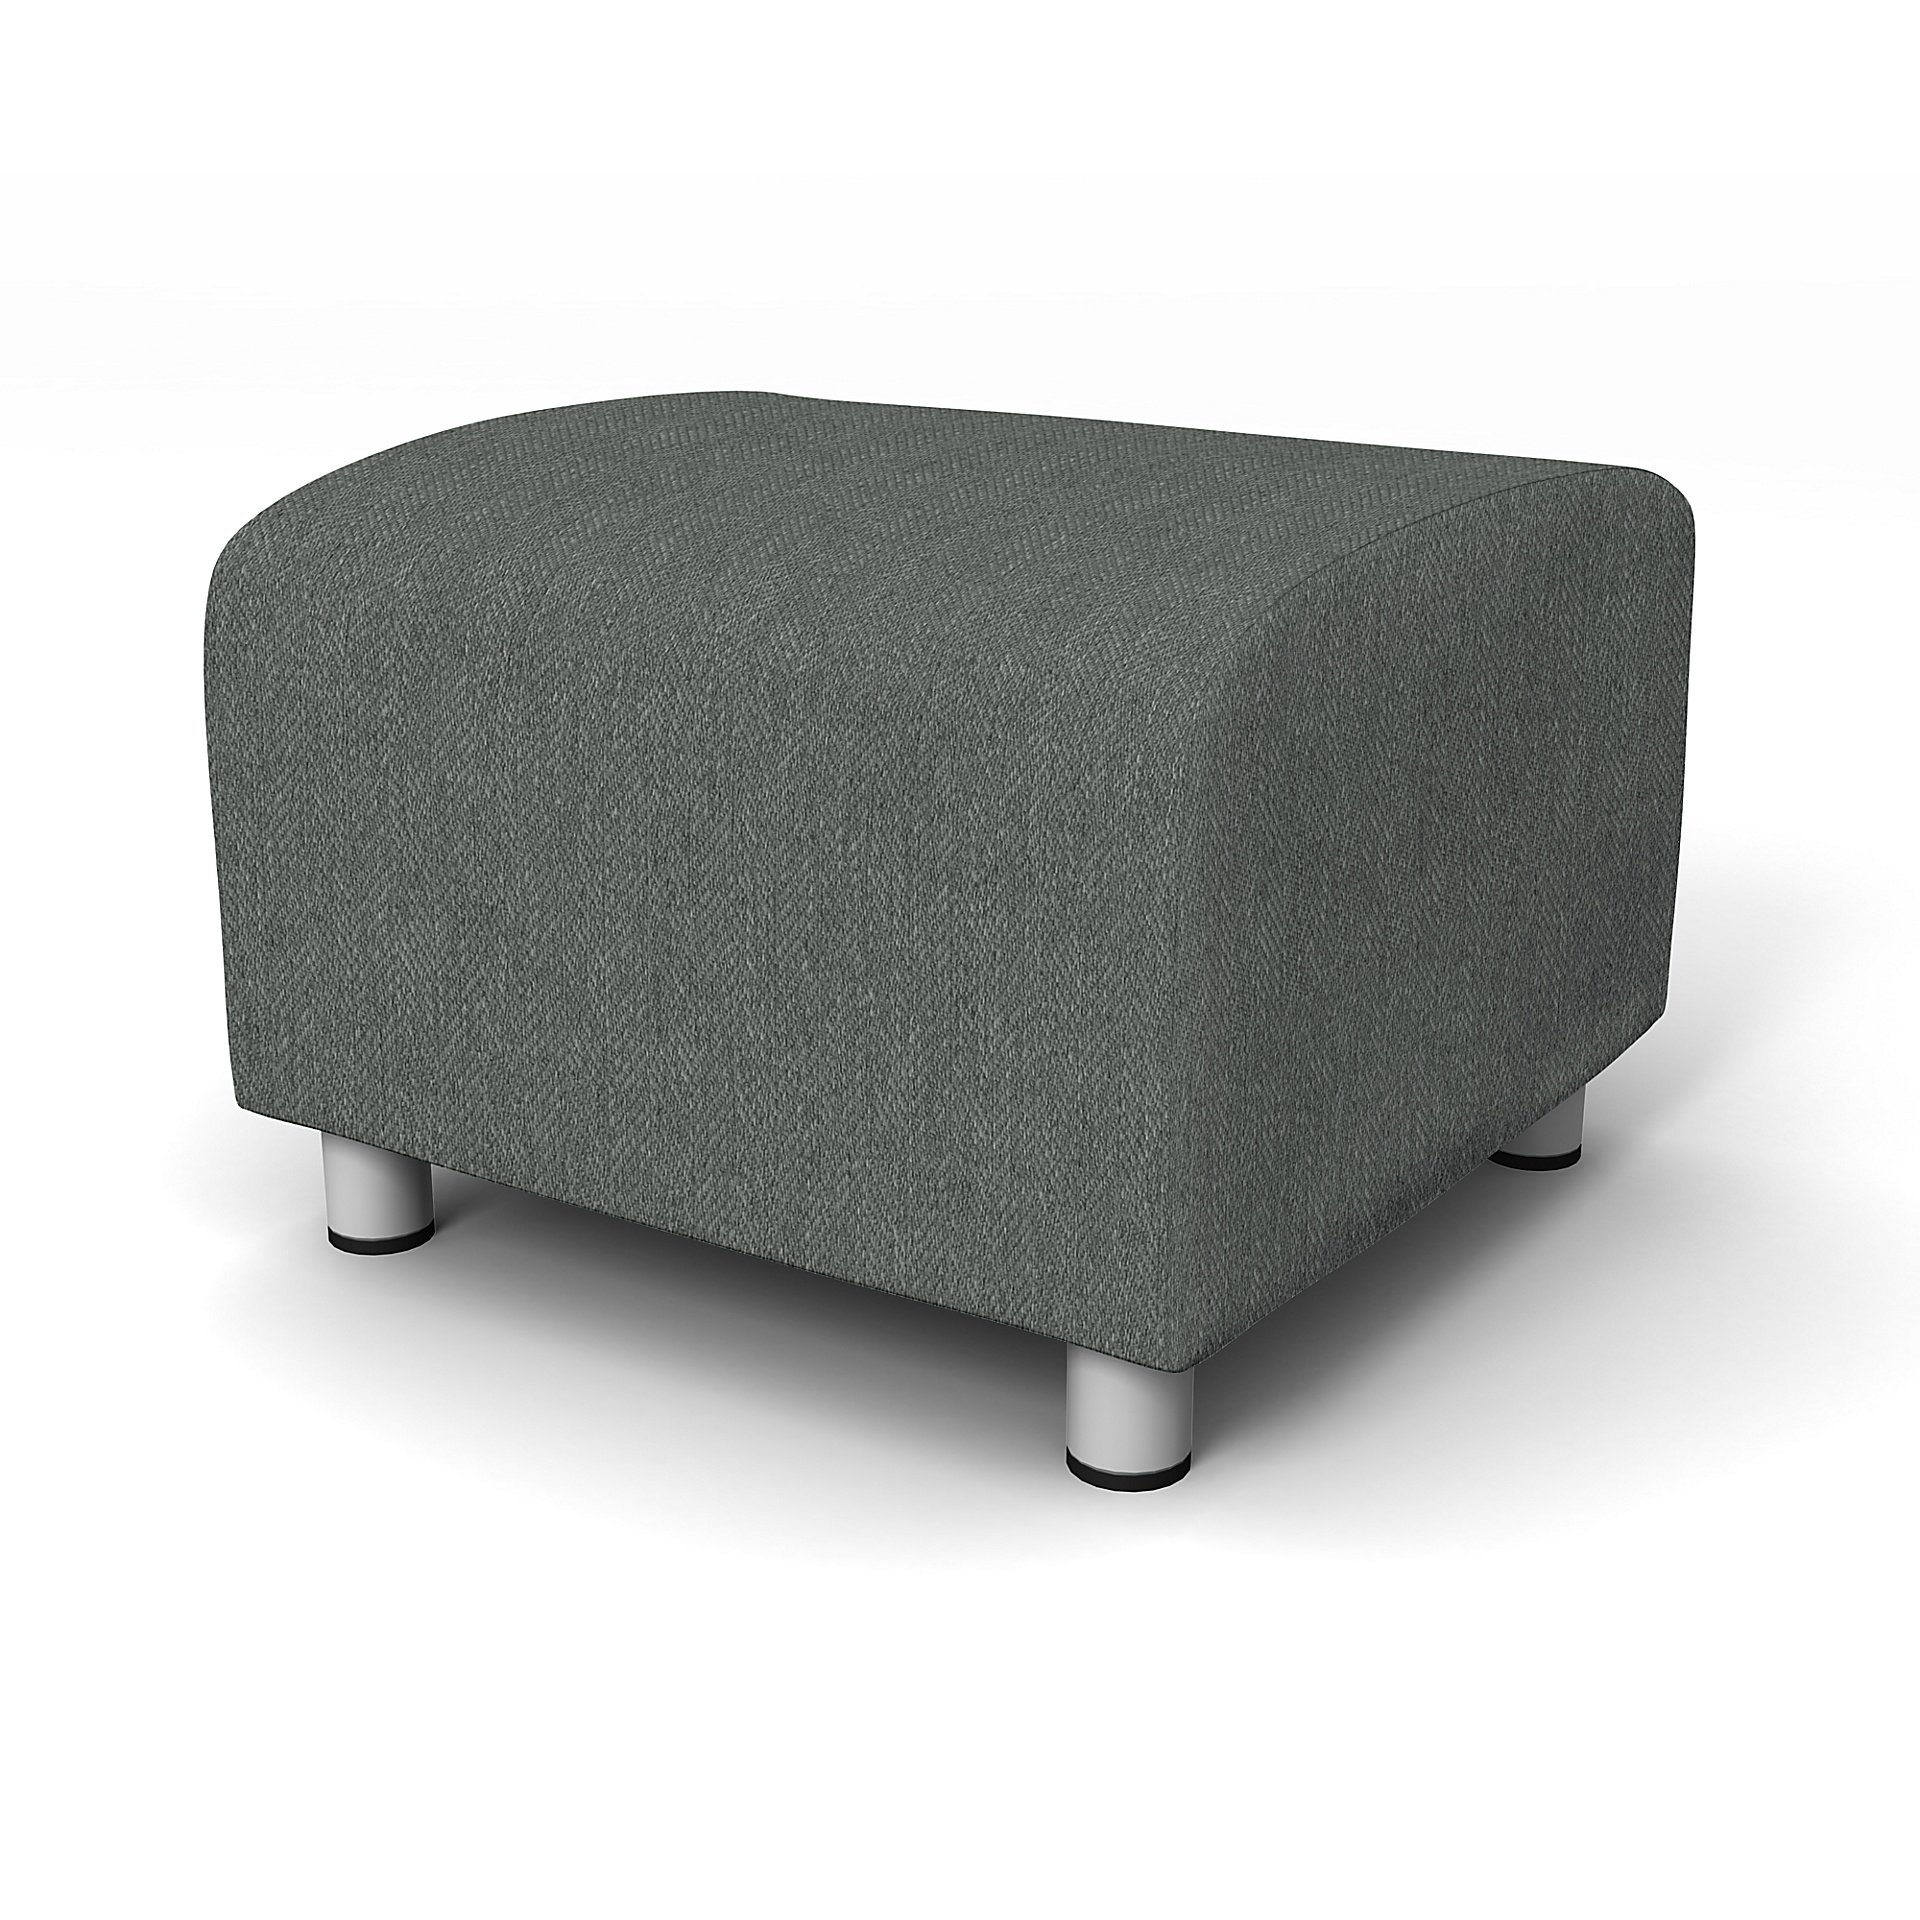 IKEA - Klippan Footstool Cover, Laurel, Boucle & Texture - Bemz